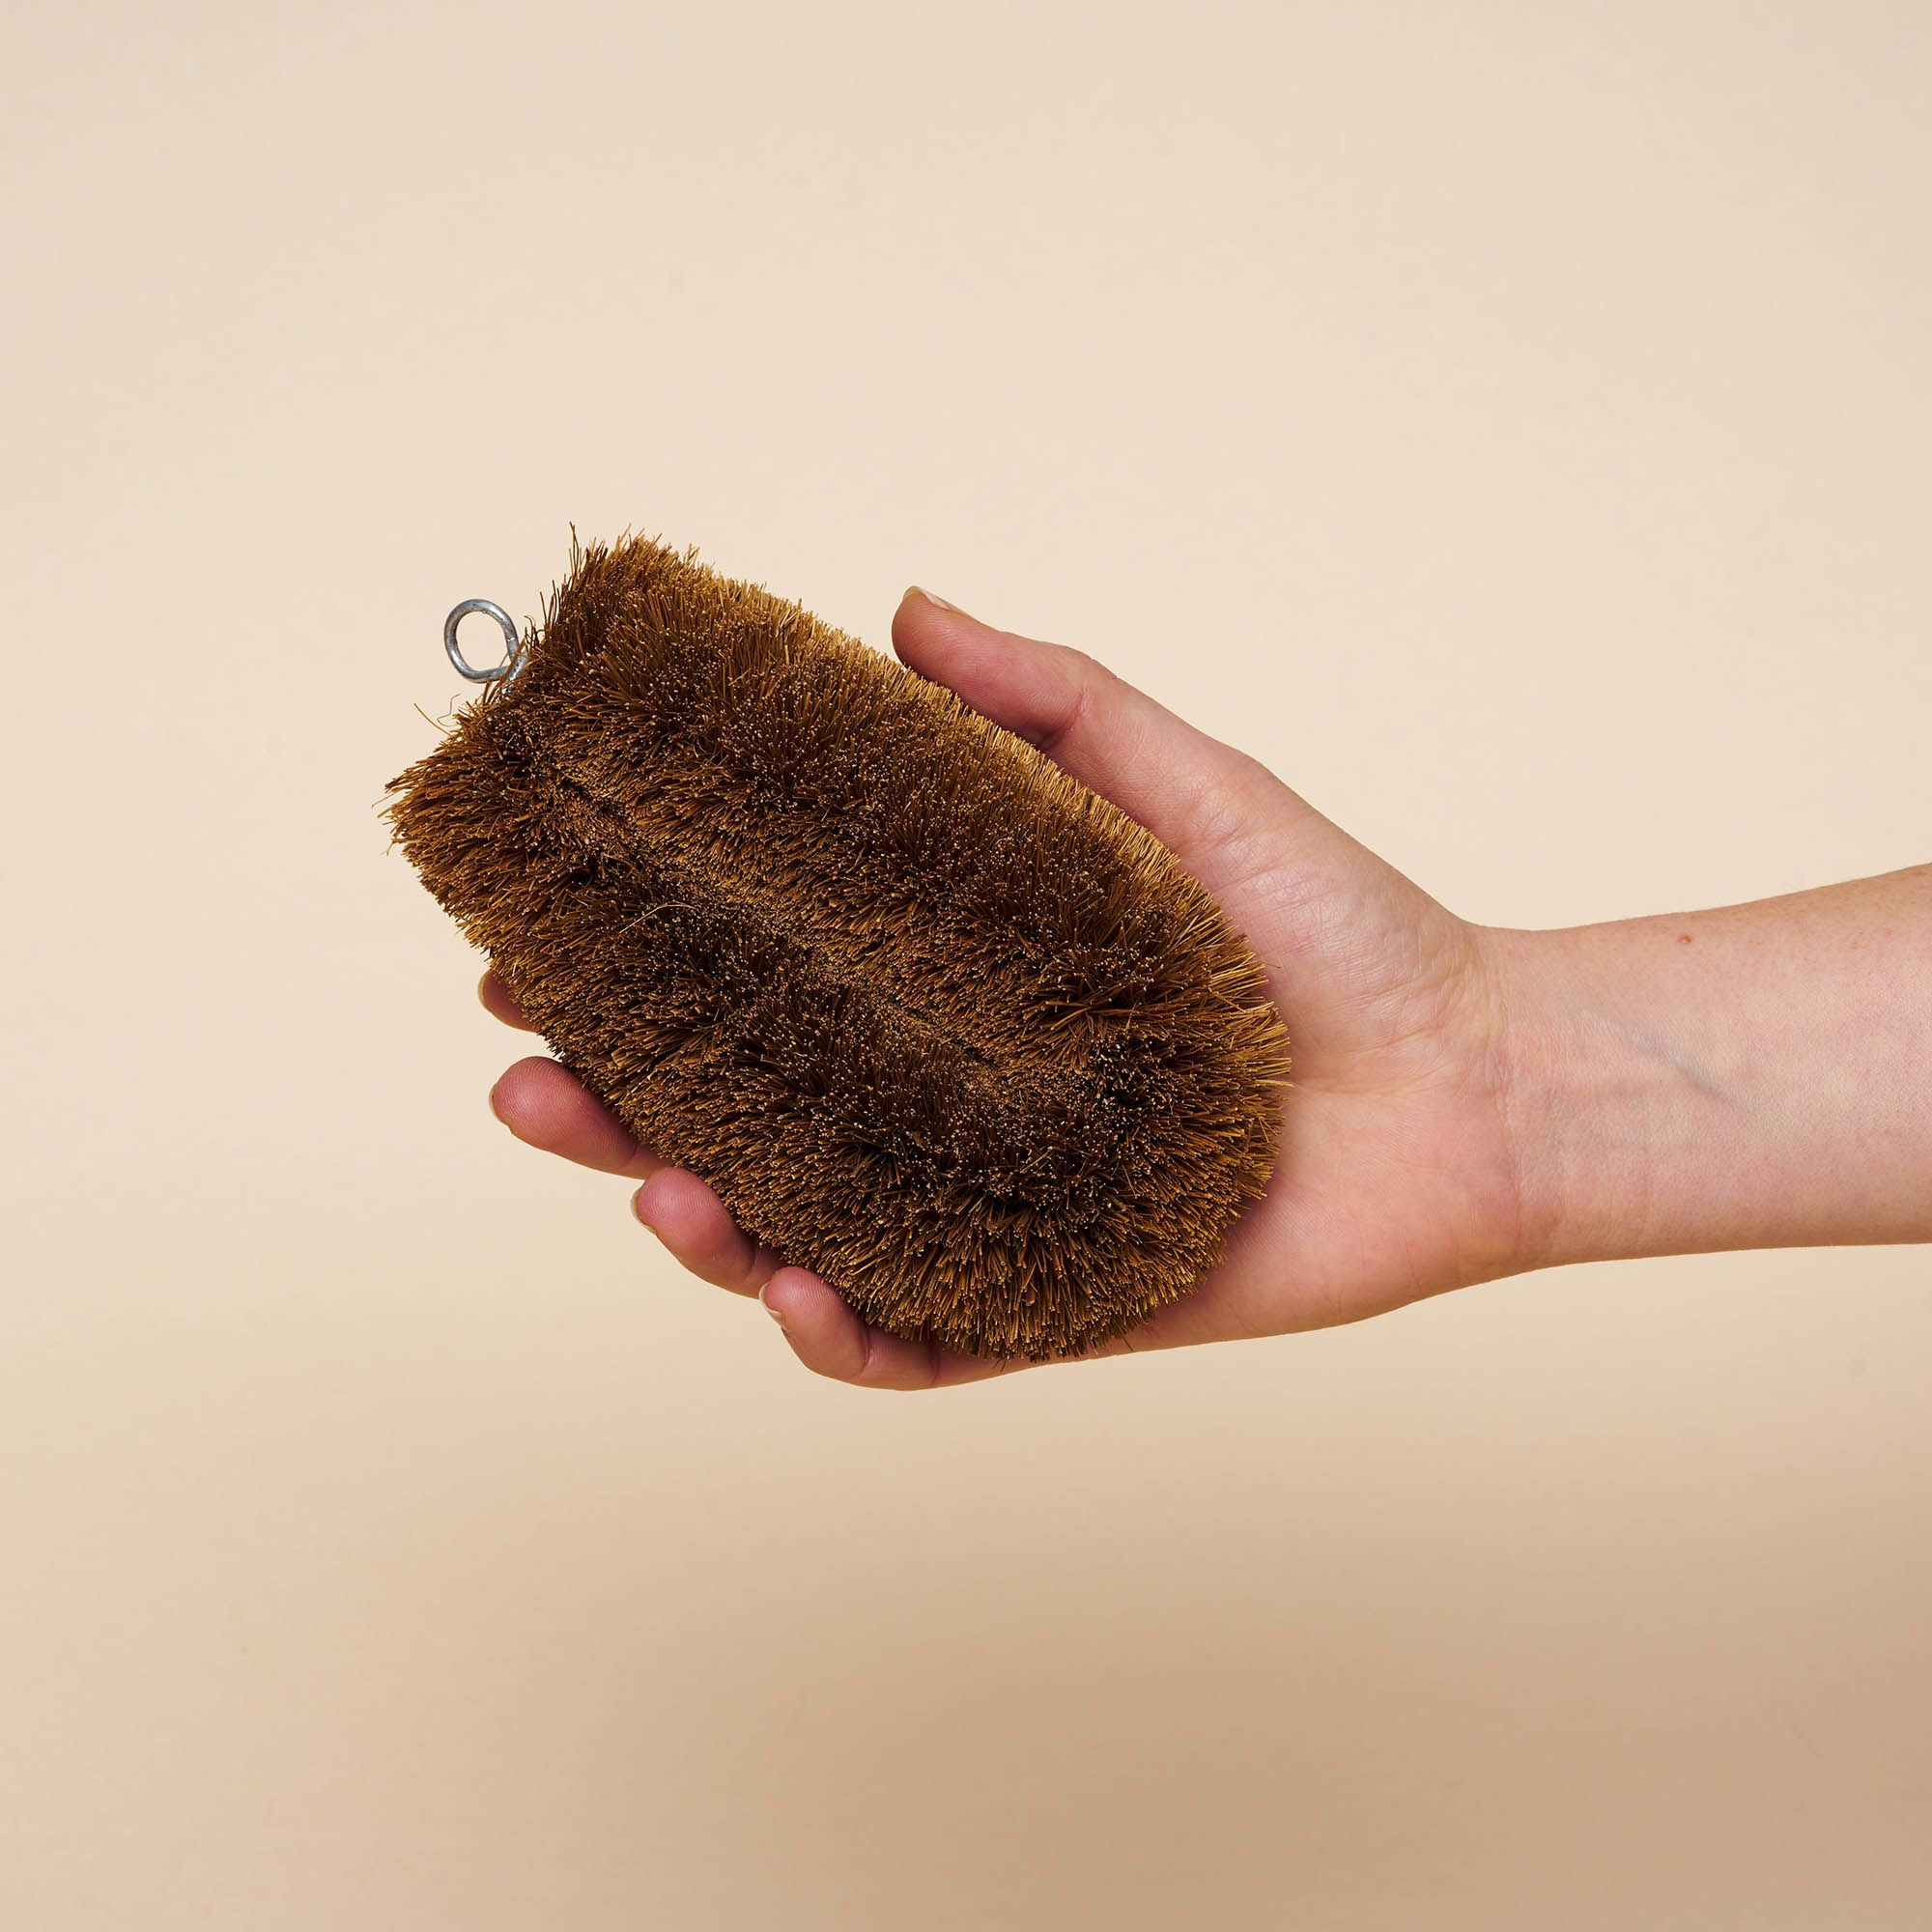 Natural hemp fiber scrub brush, oblong and dark brown with bristles